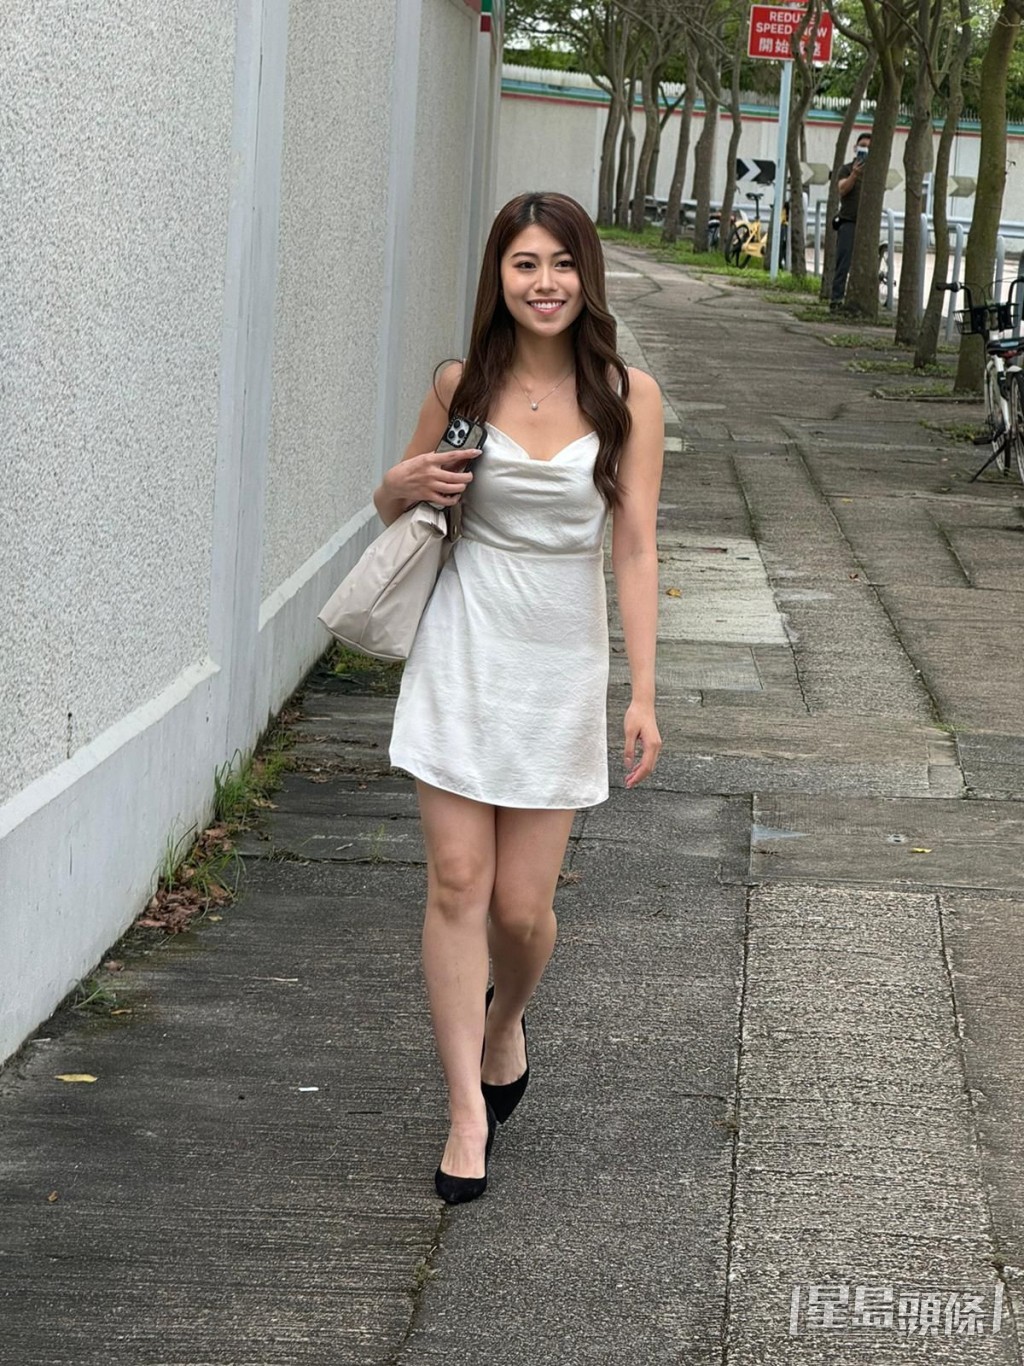 Tracy 24歲，溫哥華大學畢業，曾獲得溫哥華華姐第二名及最上鏡小姐，這次不是專程返來講香港參選，而是想在香港發展